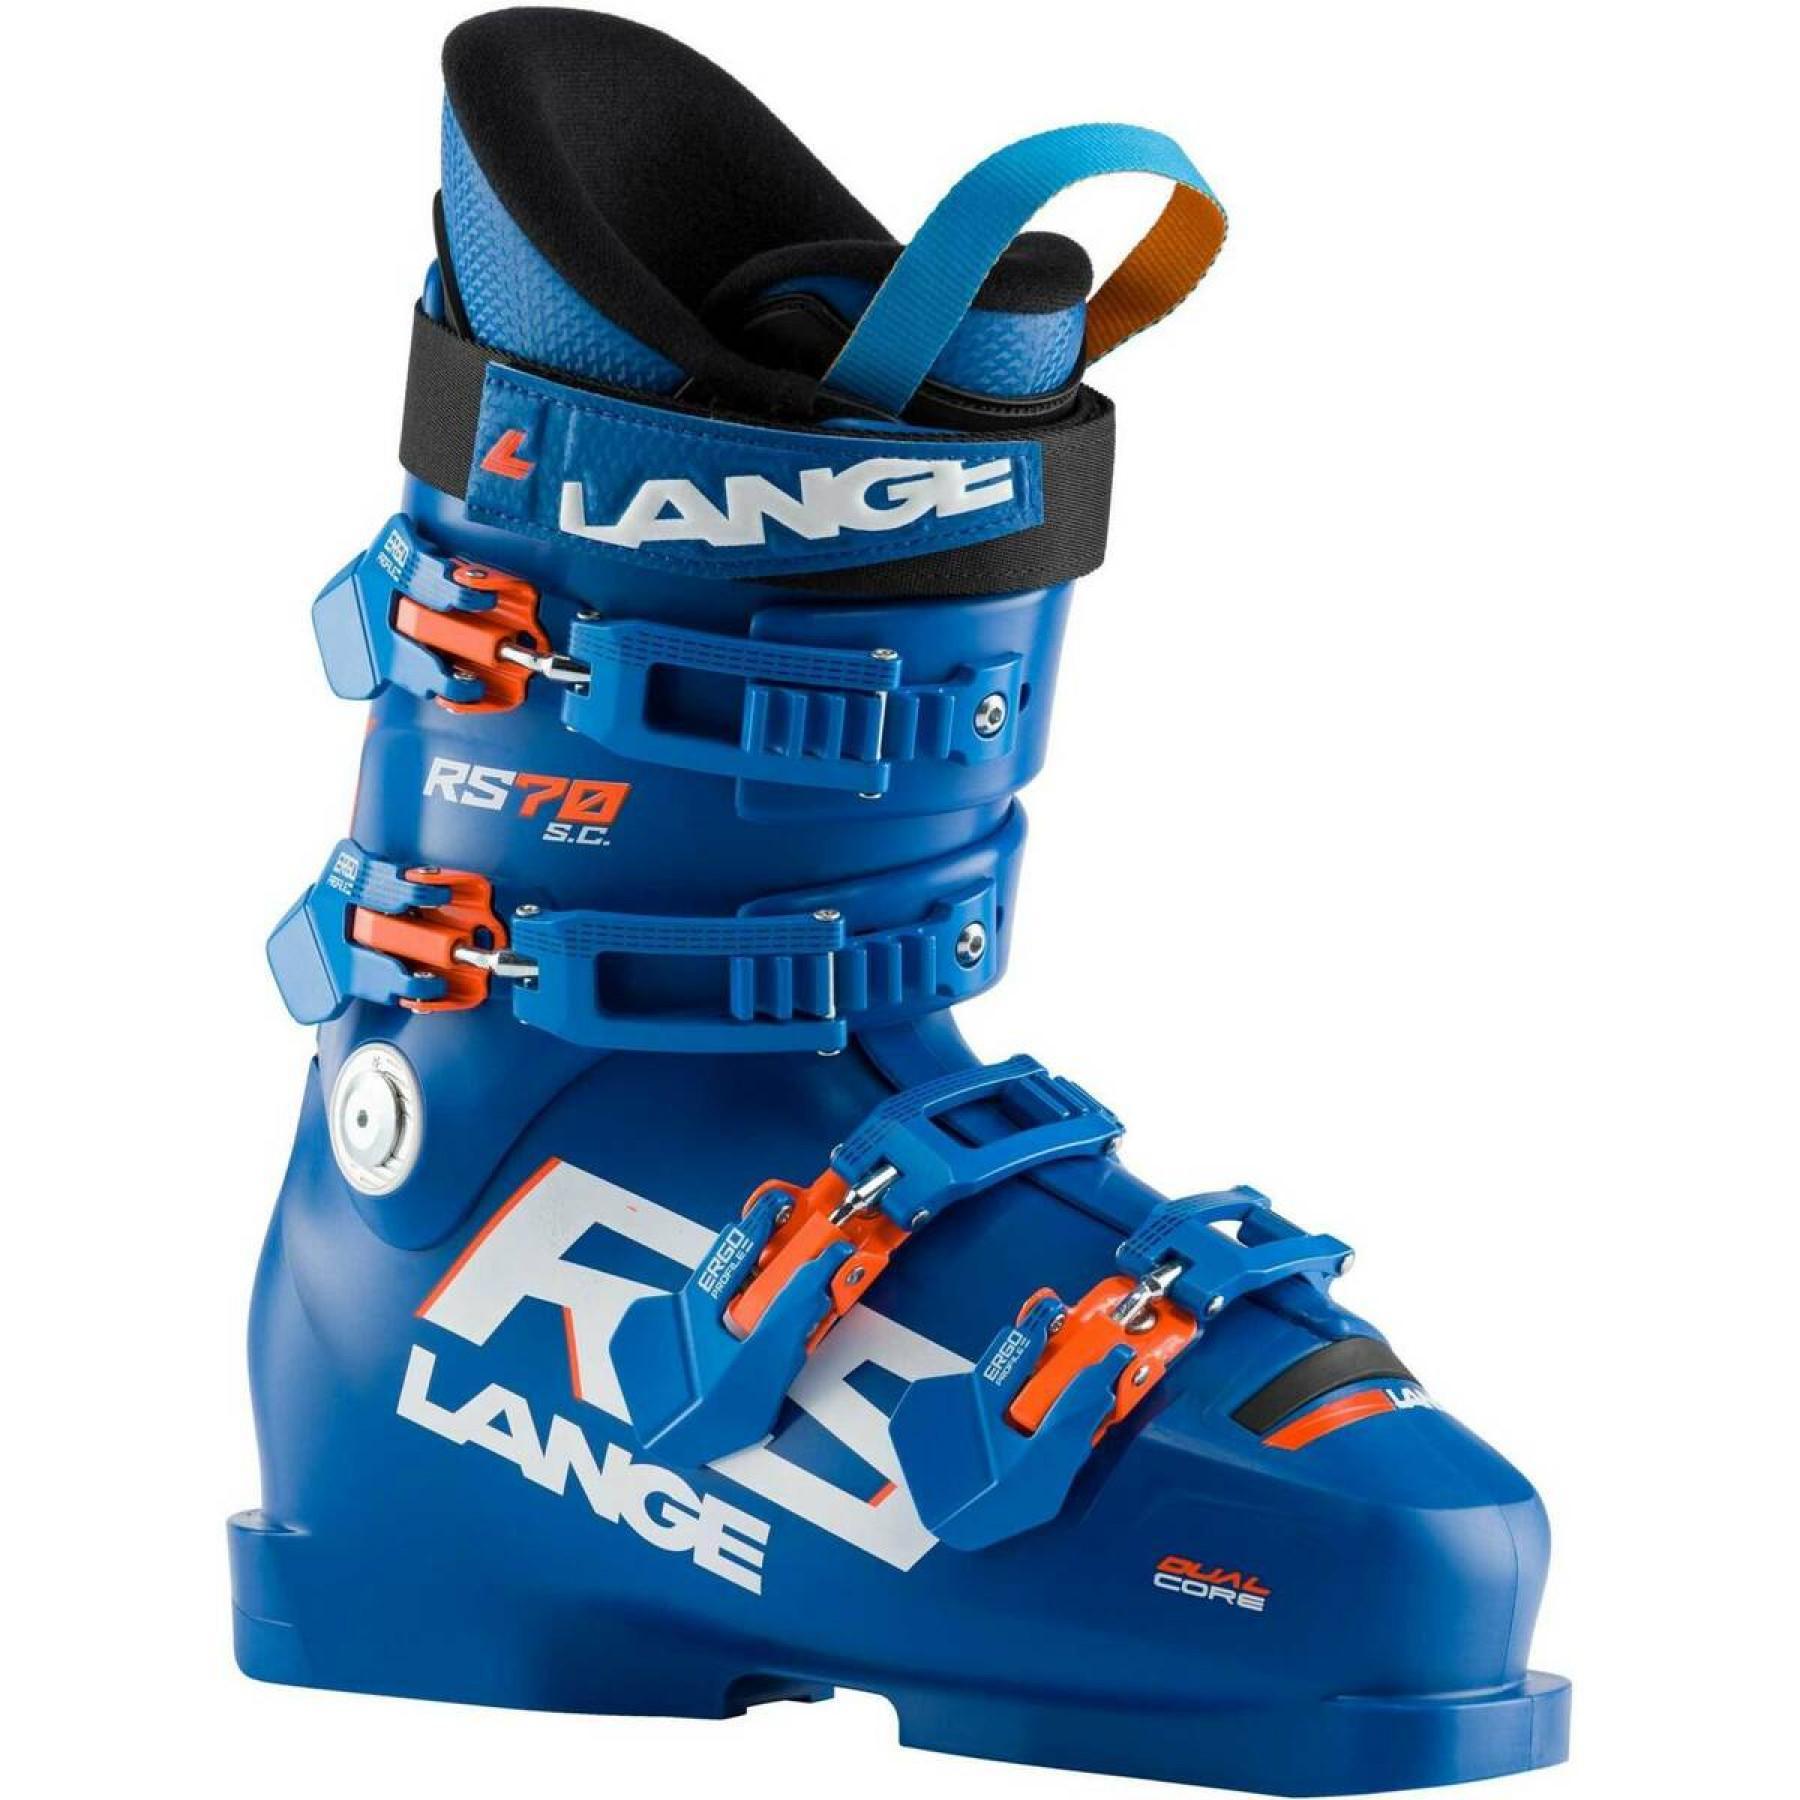 Children's ski boots Lange rs 70 s.c.